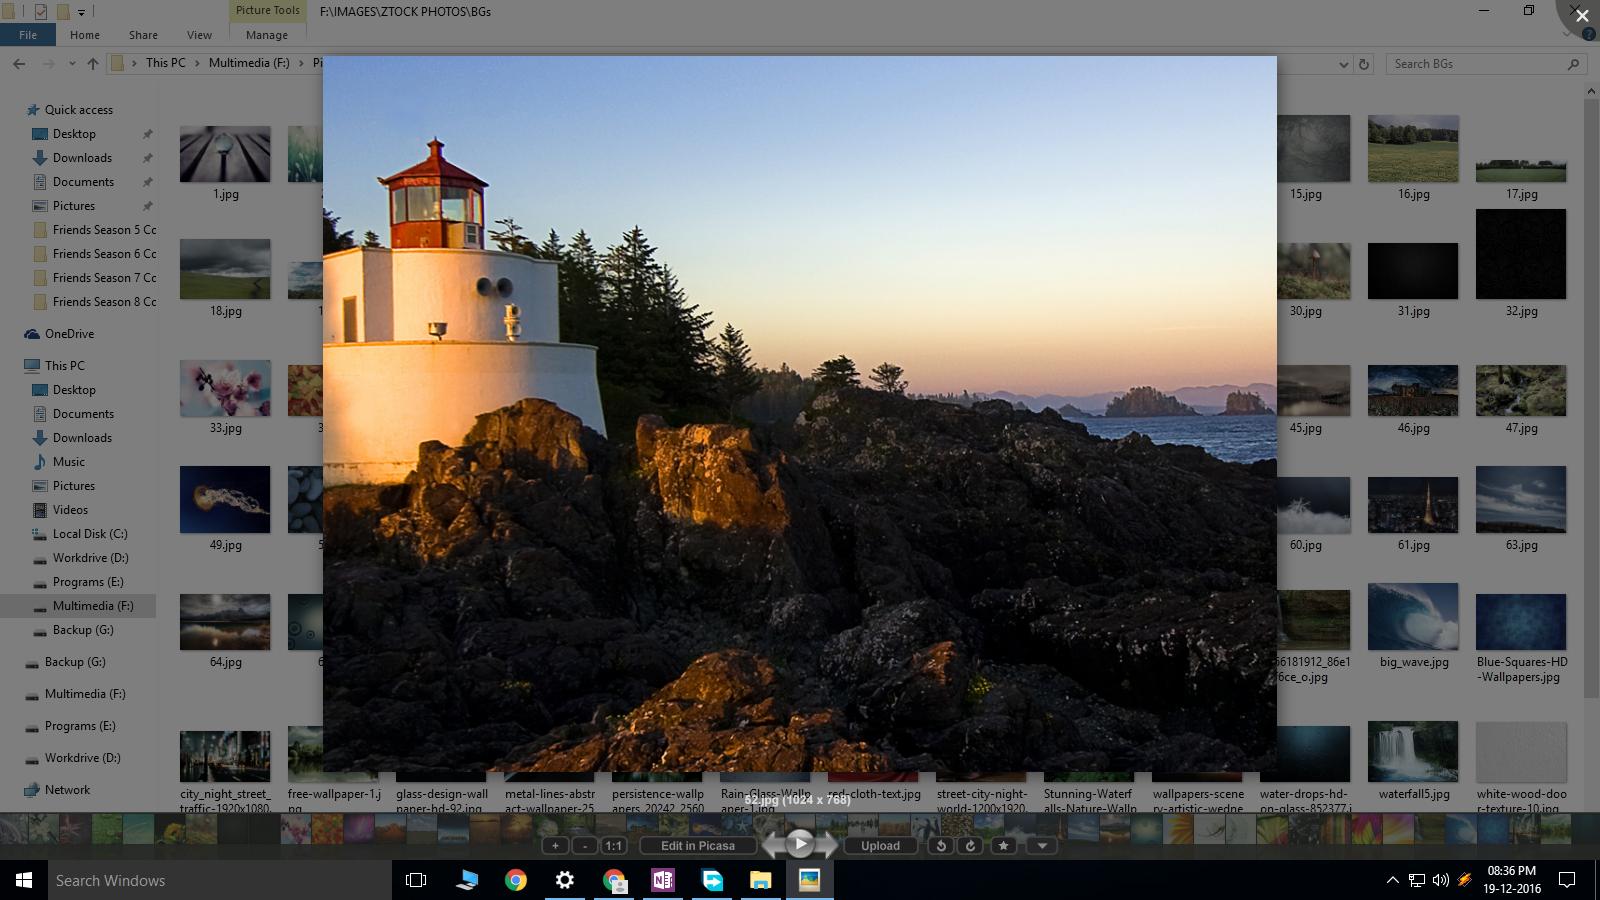 windows picture viewer download windows 10